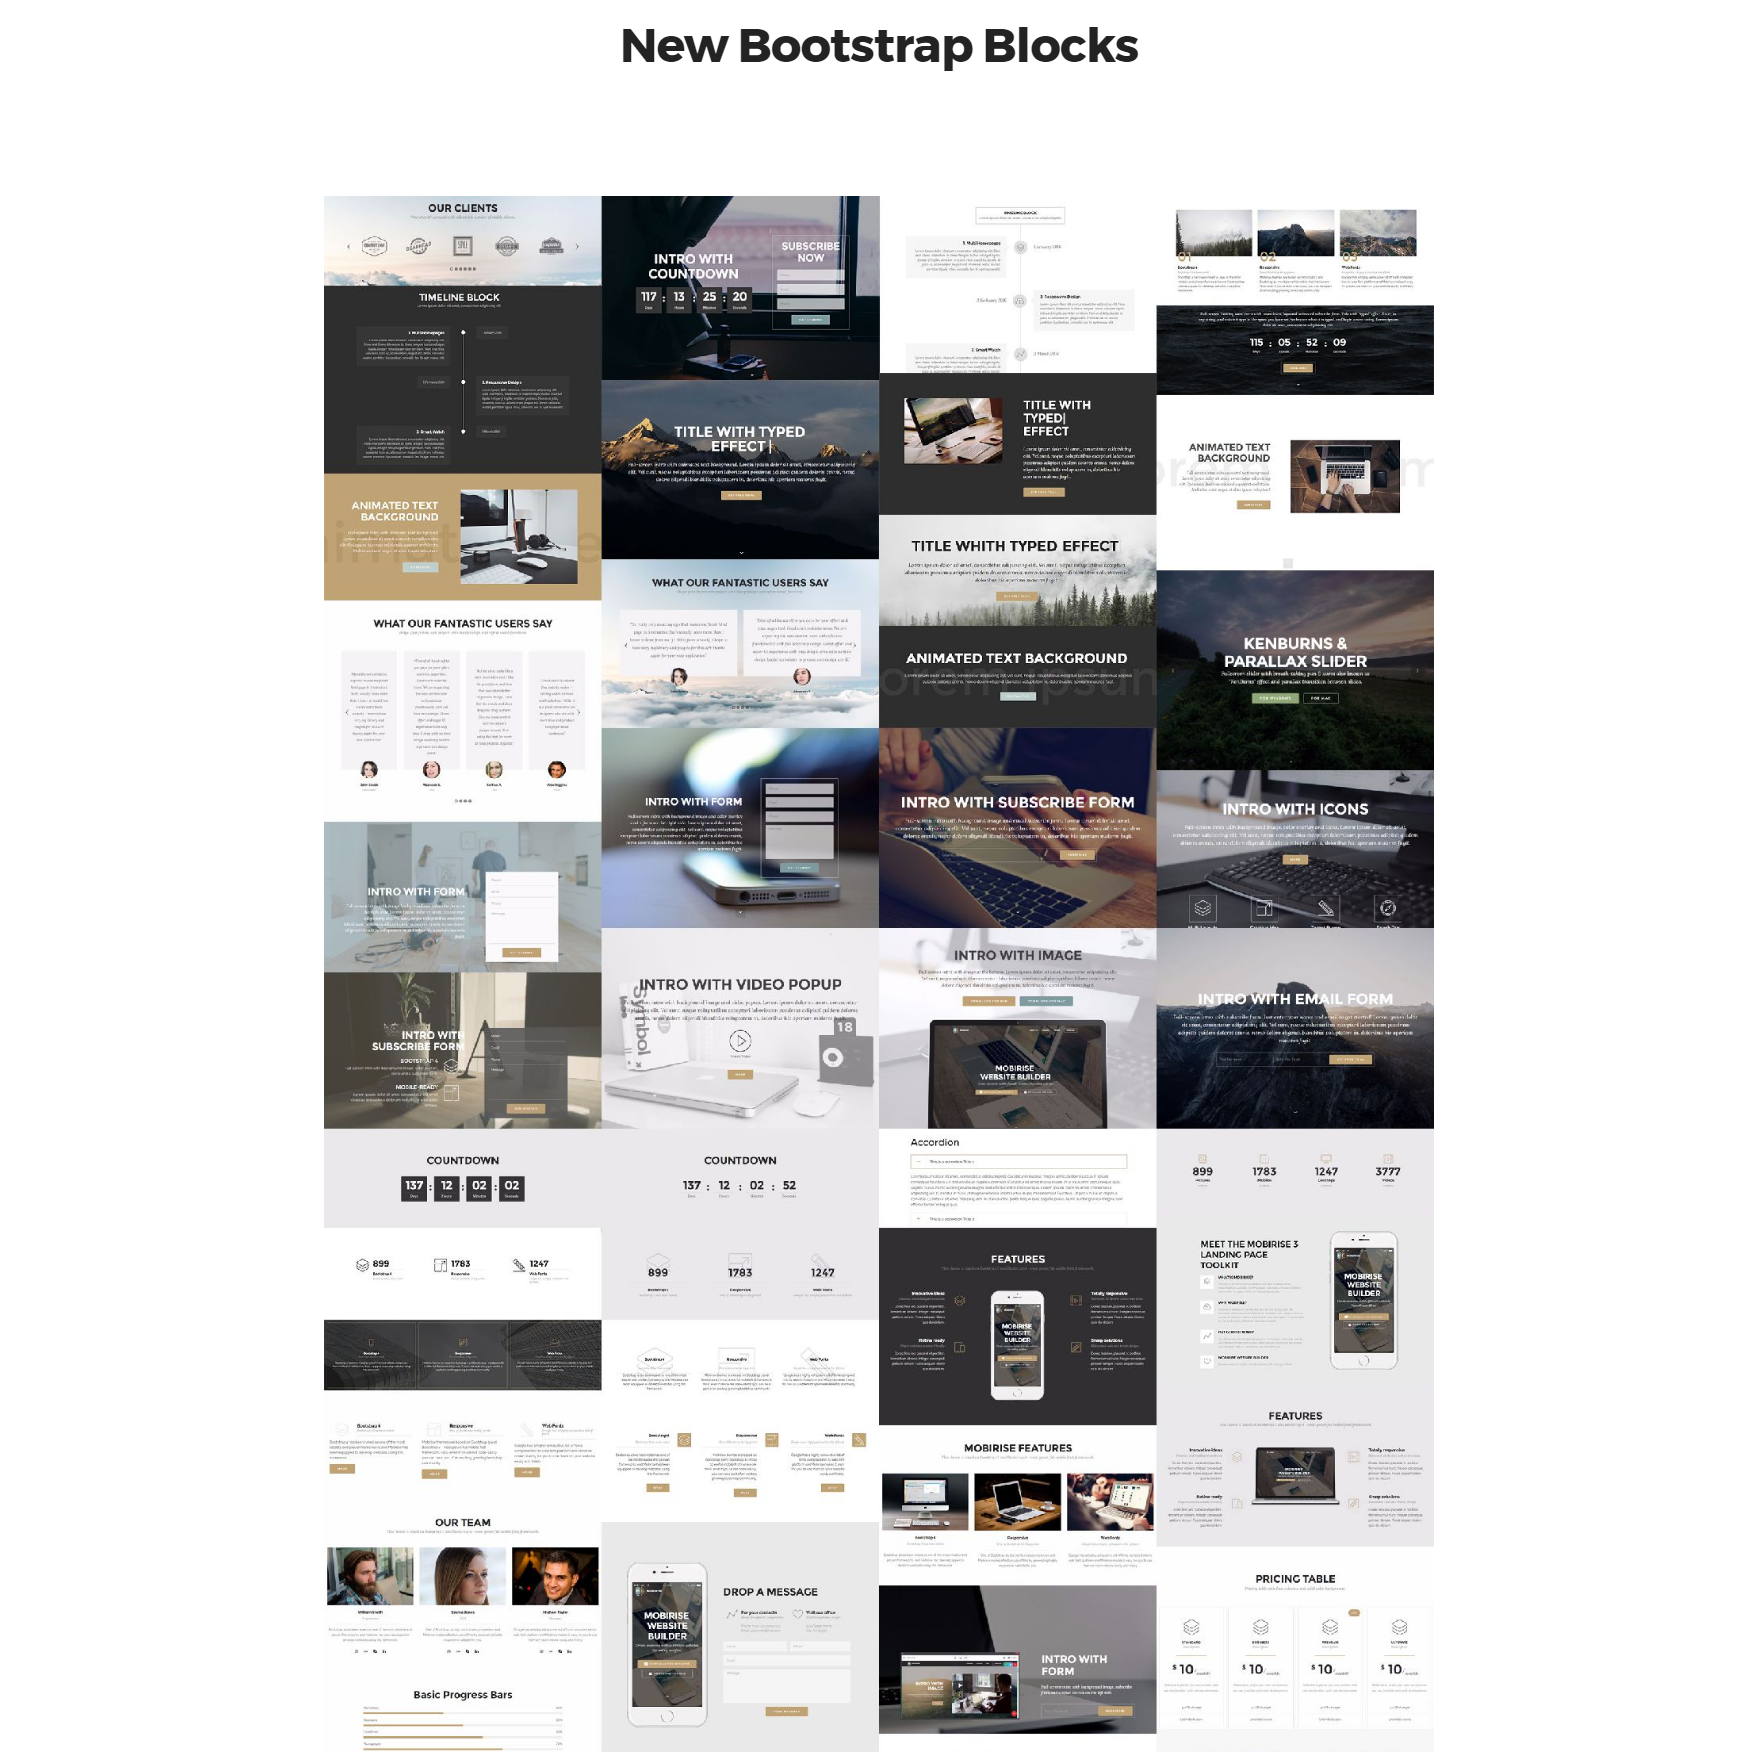 New Bootstrap Blocks